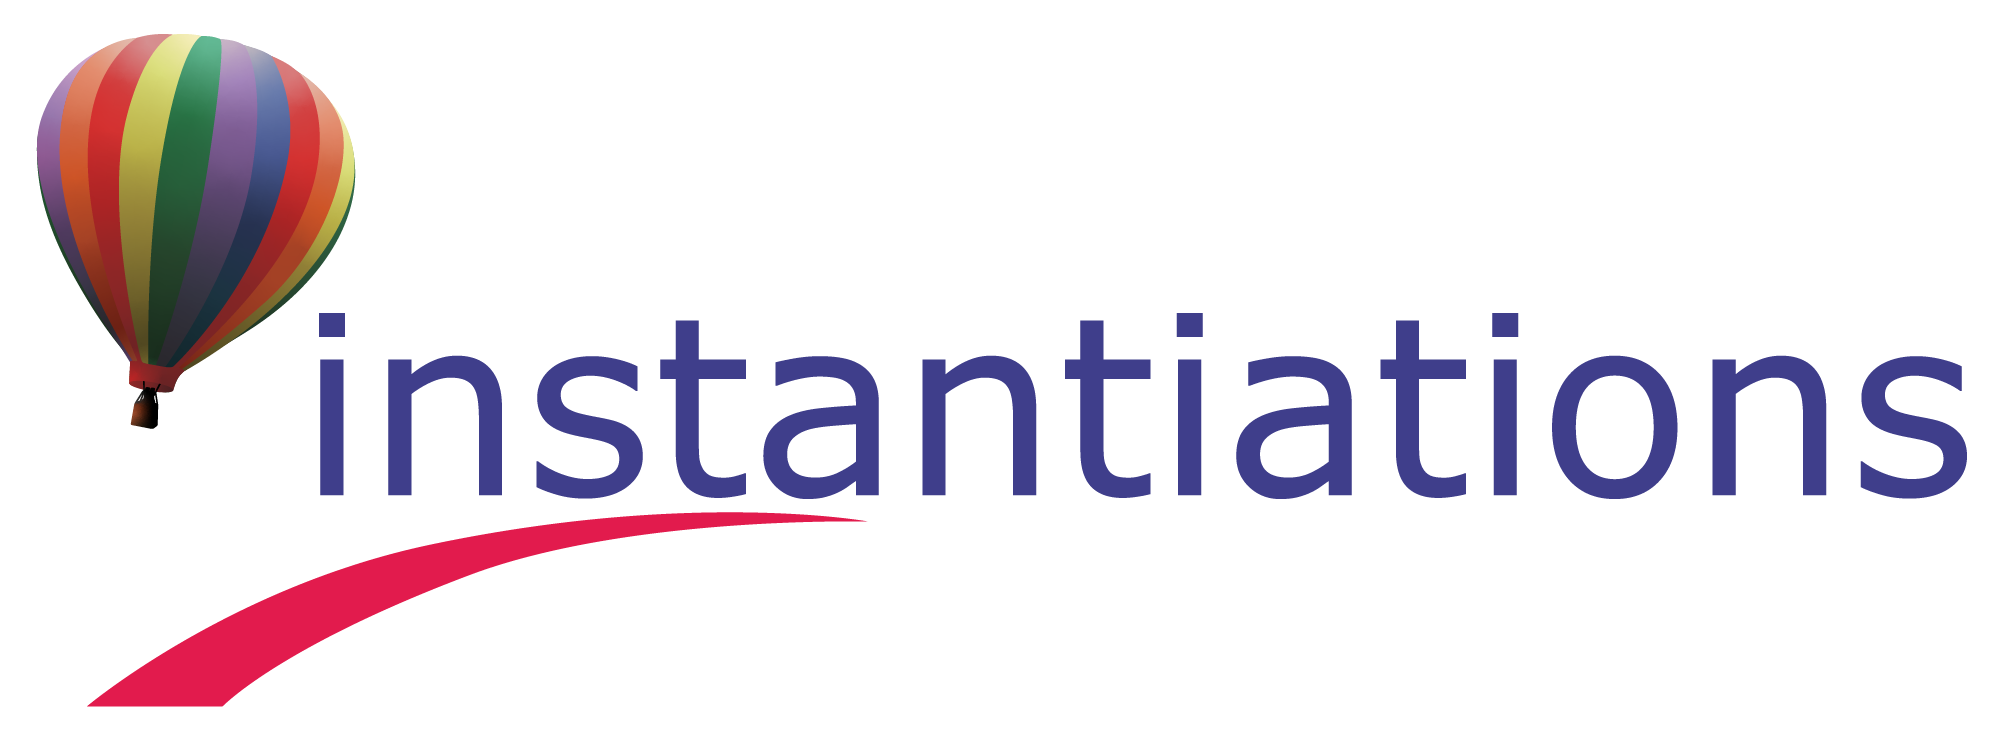 Instantiations logo 2010-2021